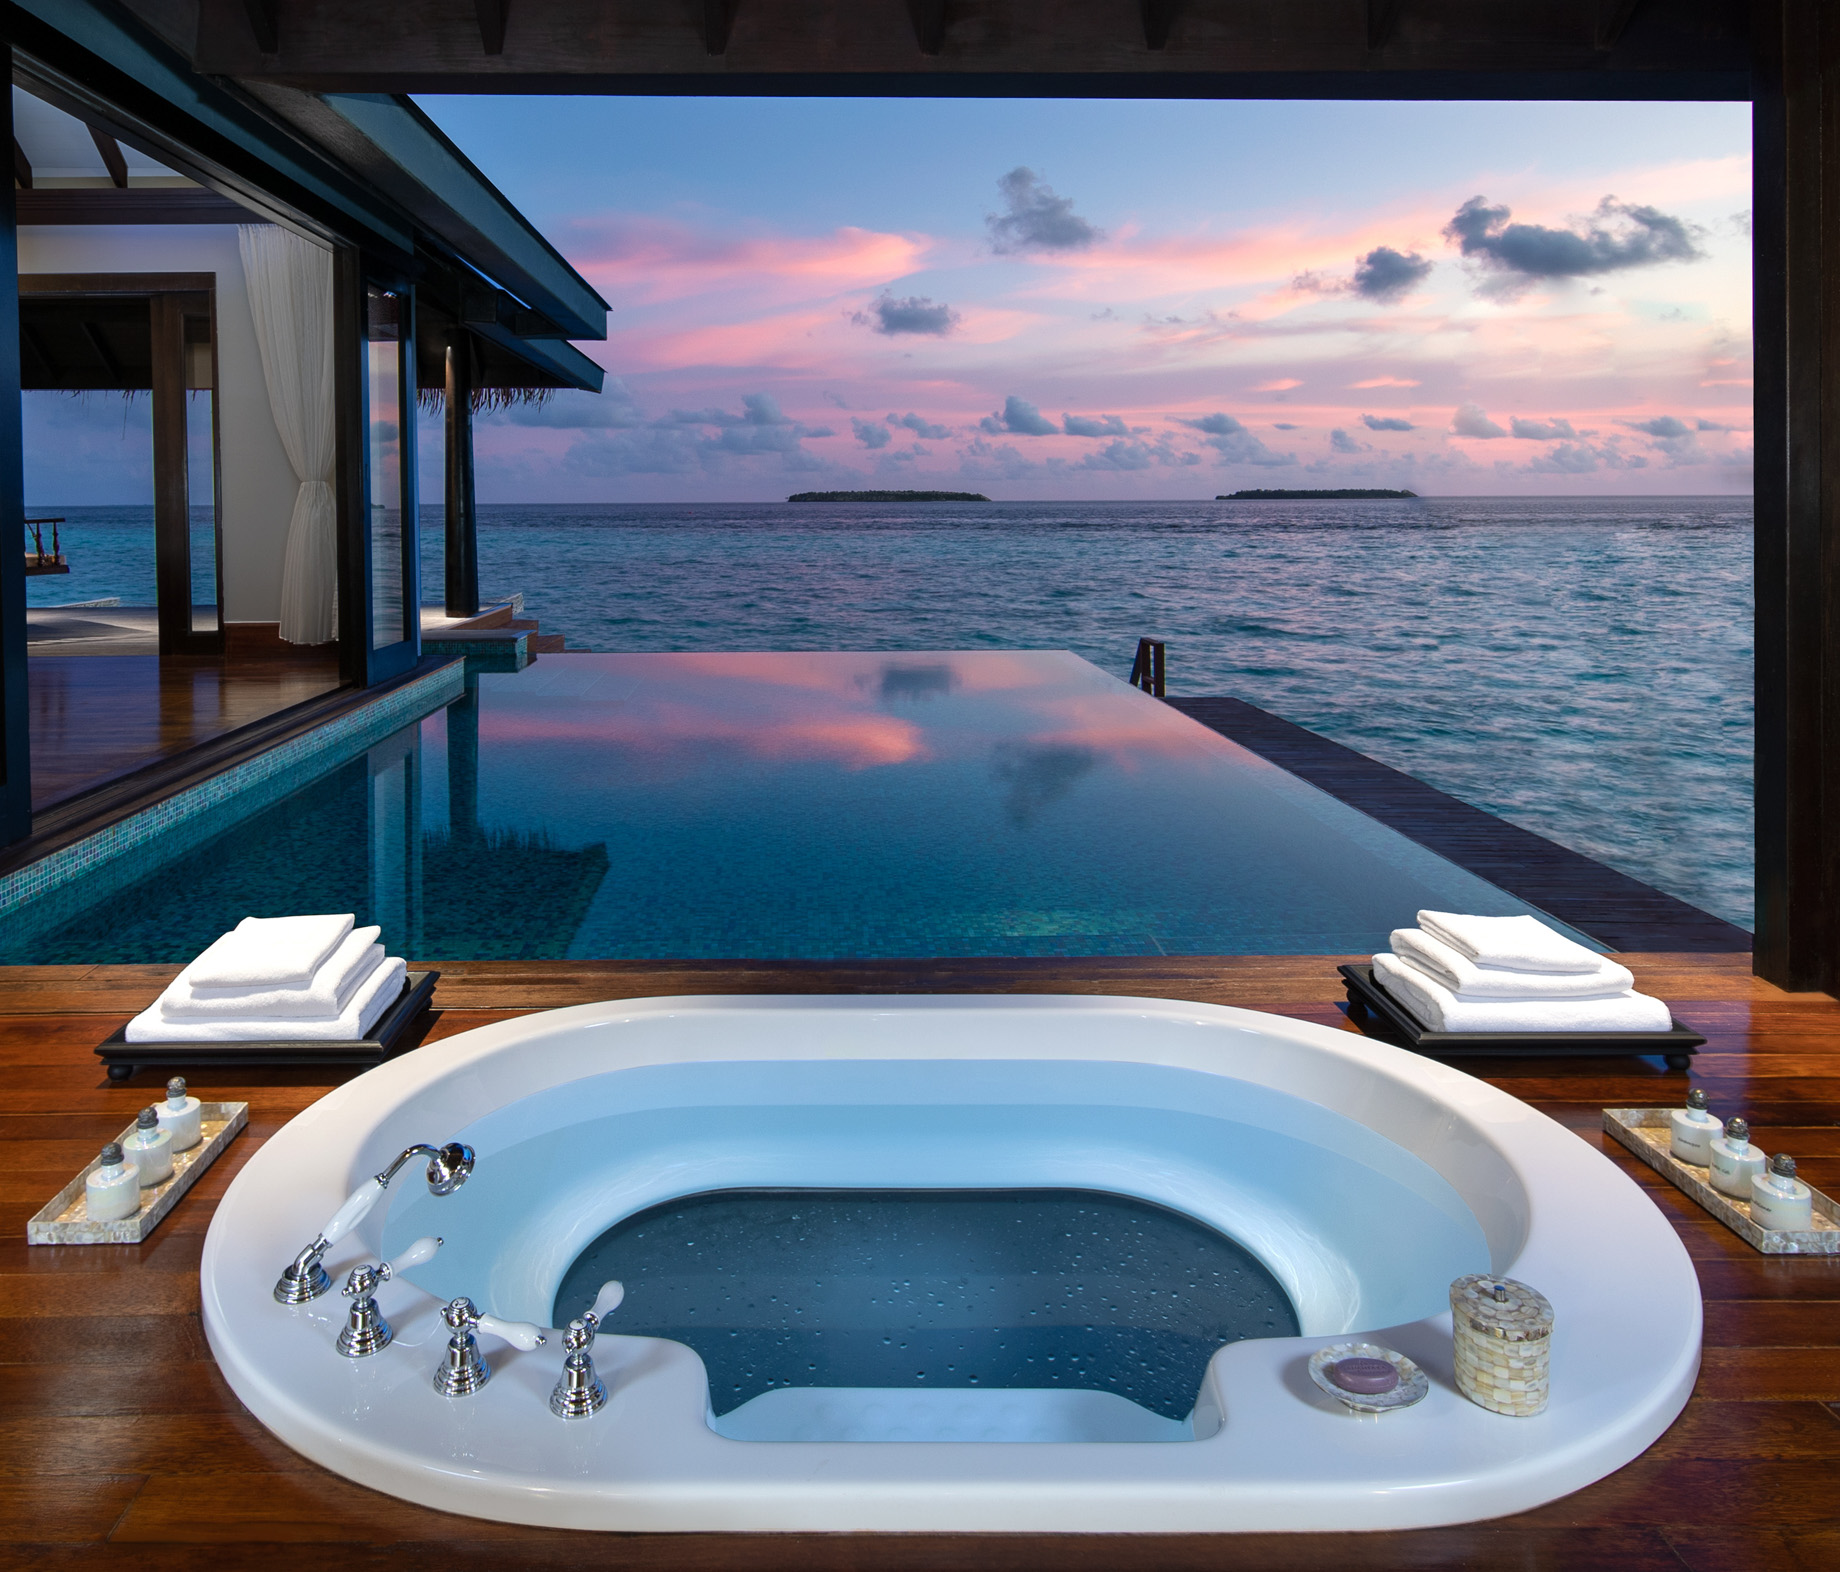 Anantara Kihavah Maldives Villas Resort - Baa Atoll, Maldives - Over Water Pool Villa Bathroom Ocean View Sunset